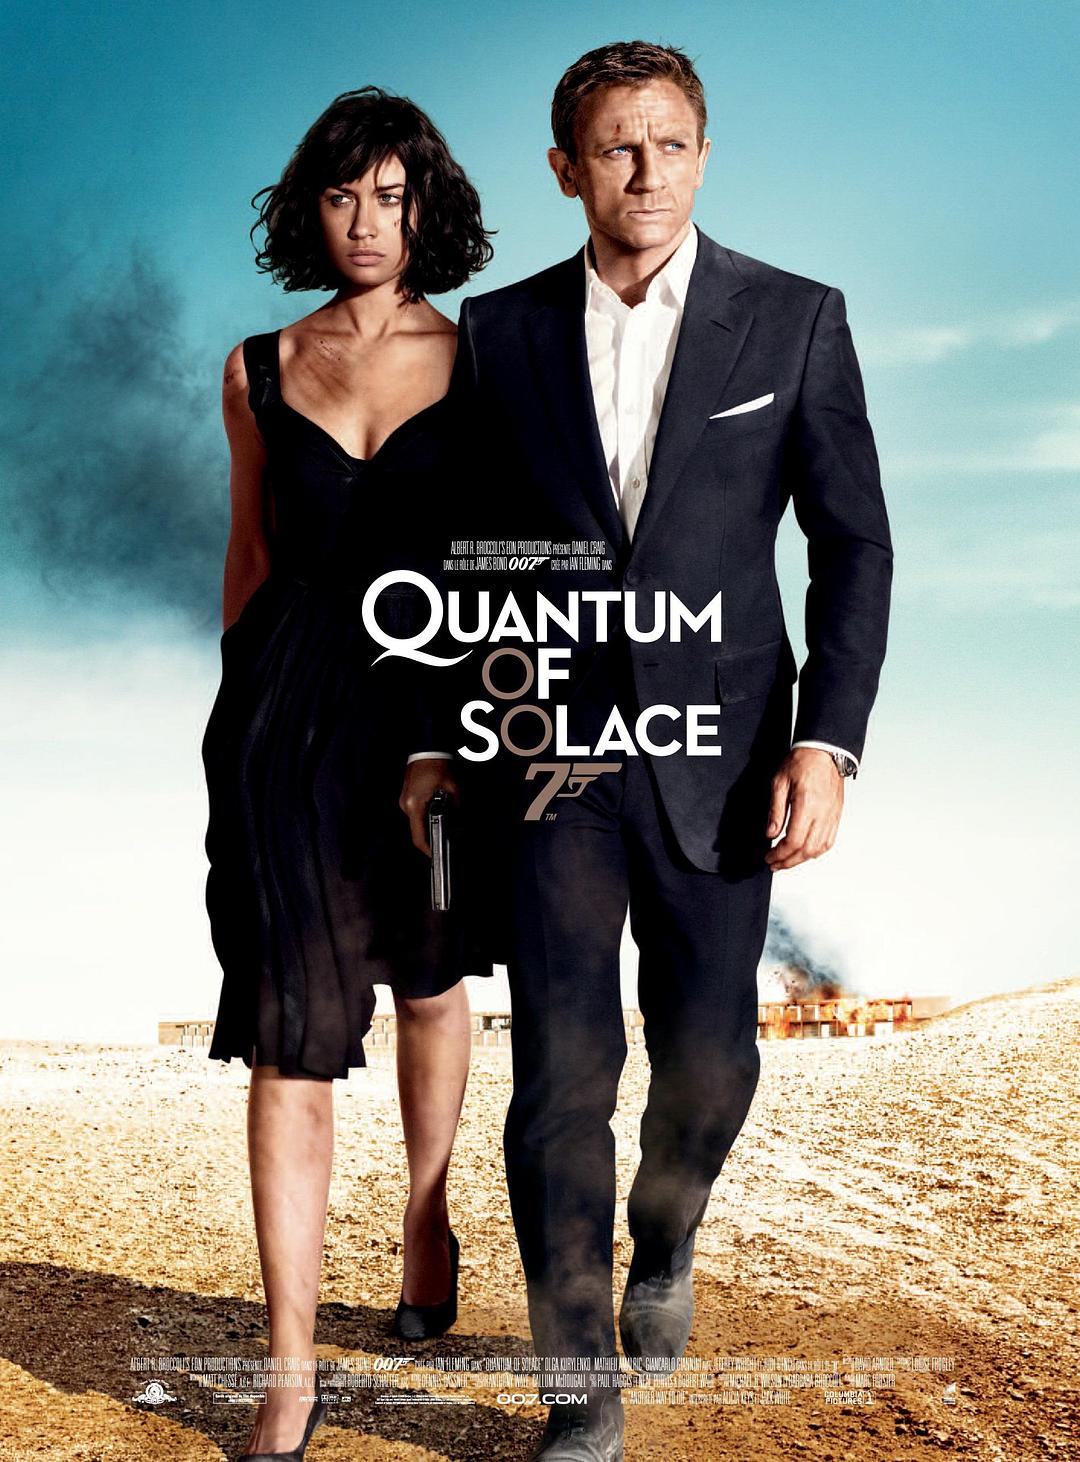 007:大破量子危机/007大破量子危机 Quantum.of.Solace.2008.2160p.BluRay.REMUX.HEVC.DTS-HD.MA.5.1-FGT 53.55GB-1.png